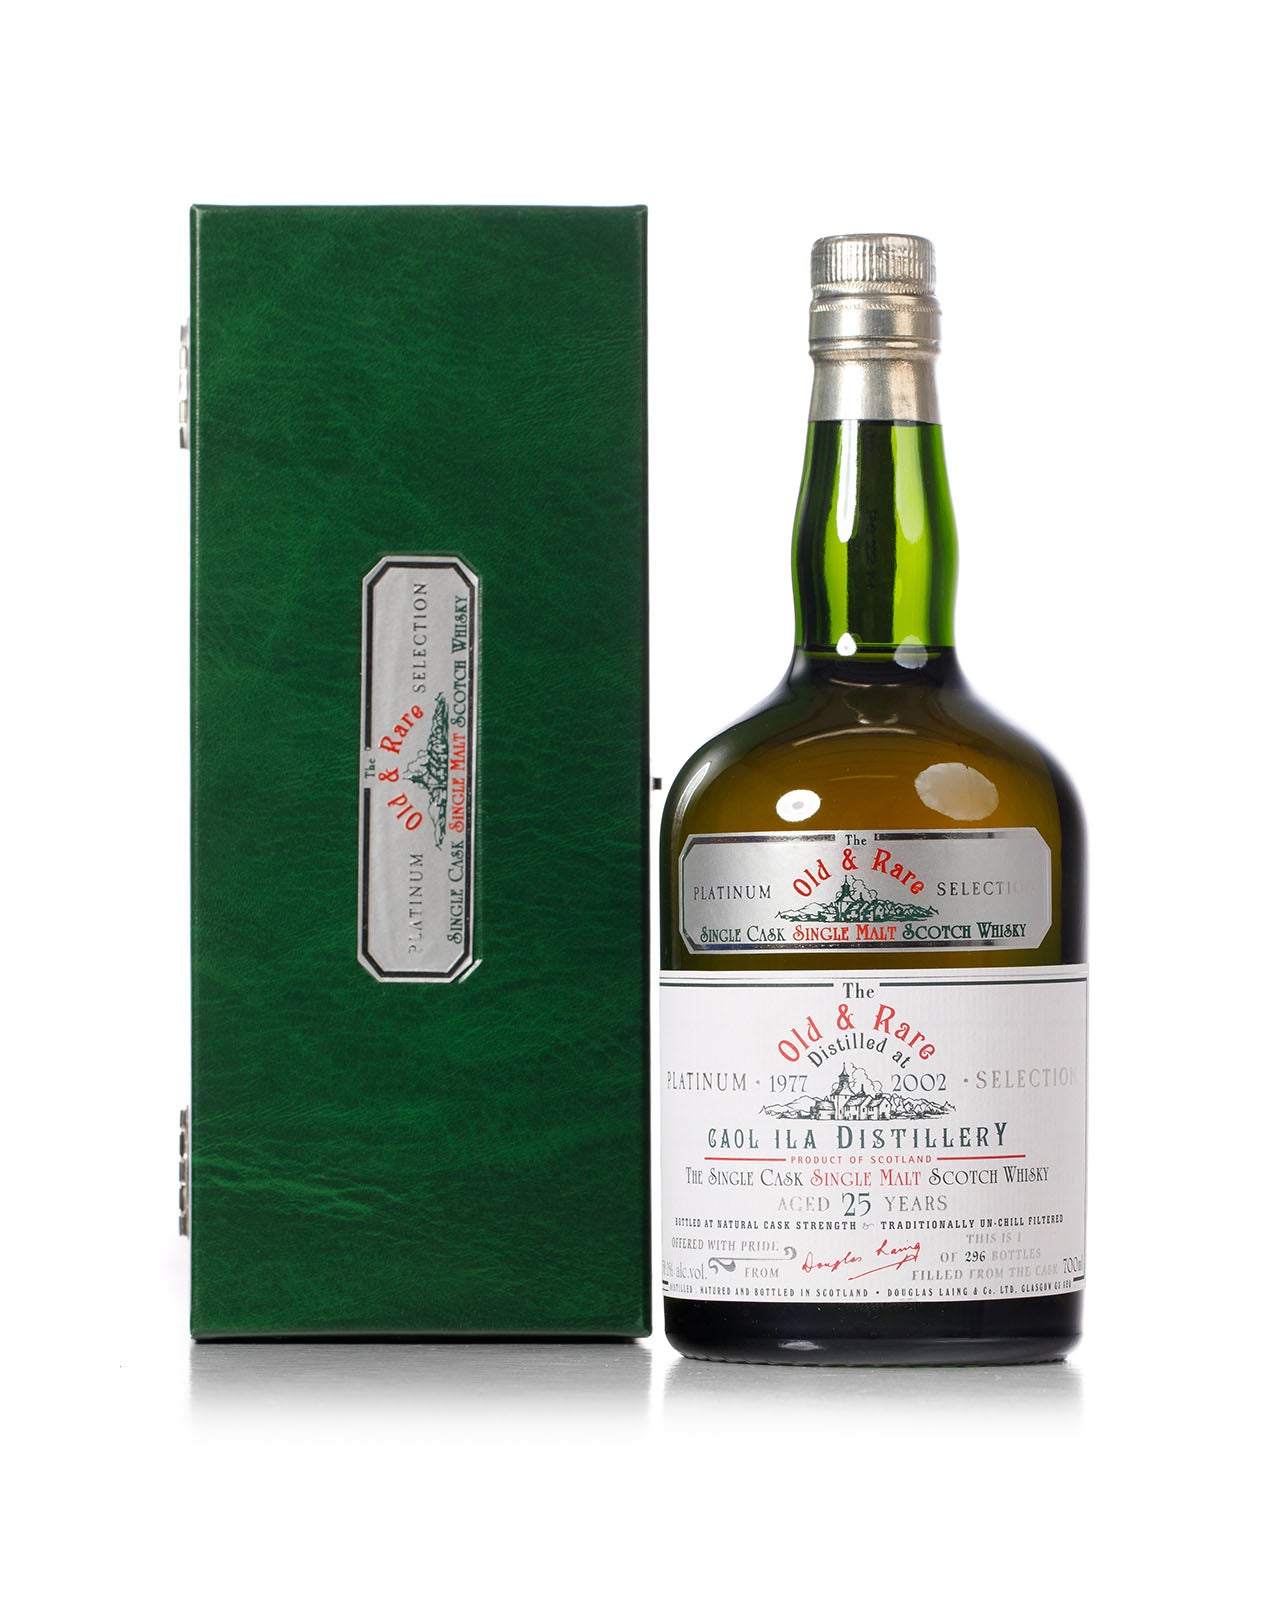 Buy Douglas Laing's XOP Caol Ila 25 Year Old Scotch Whisky Online